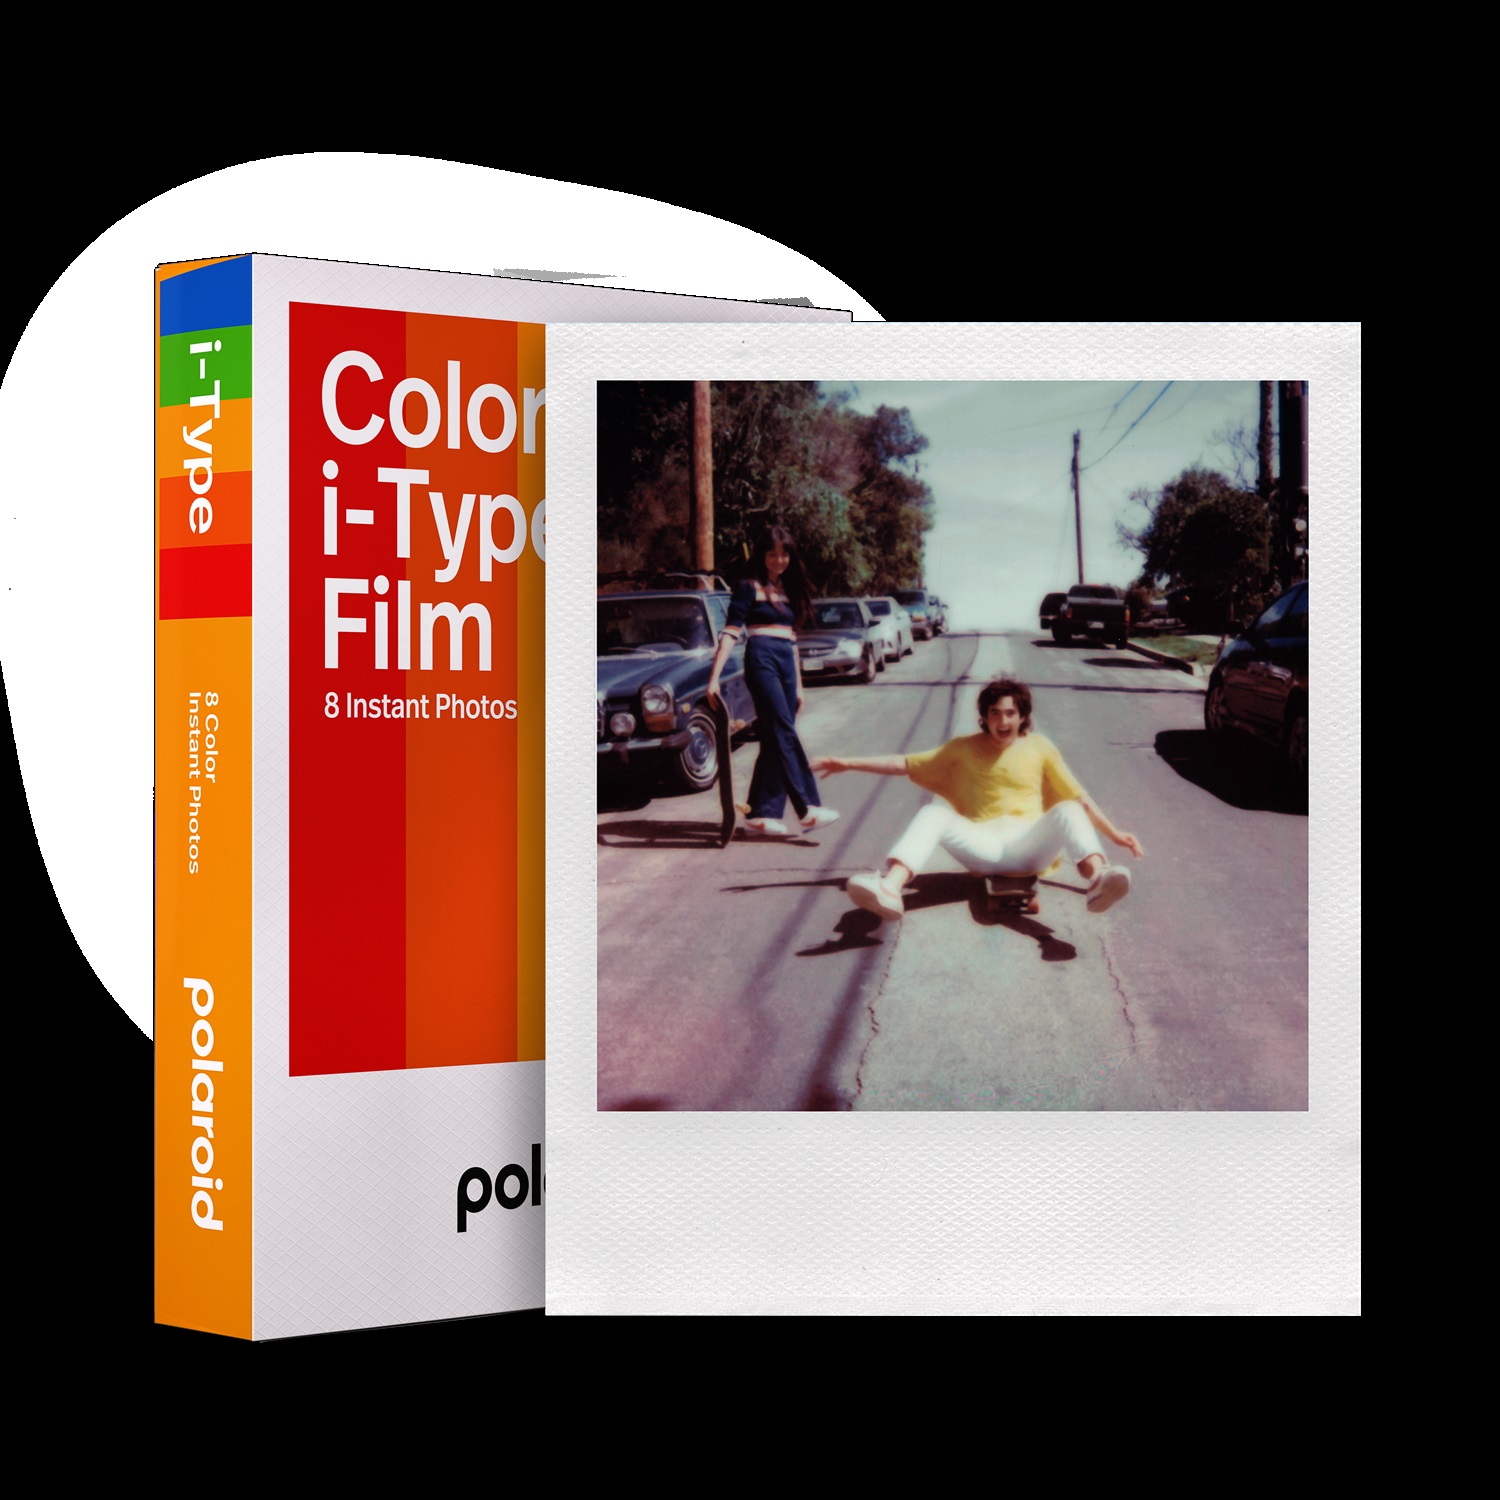 Photo4Less  Polaroid NOW i-Type Camera - Black + Polaroid Color i-Type  Instant Film (8 Exposures) + Phobea Leather 5″ Photo Album for Wide Prints  Holds 32 Prints- Black + Cloth